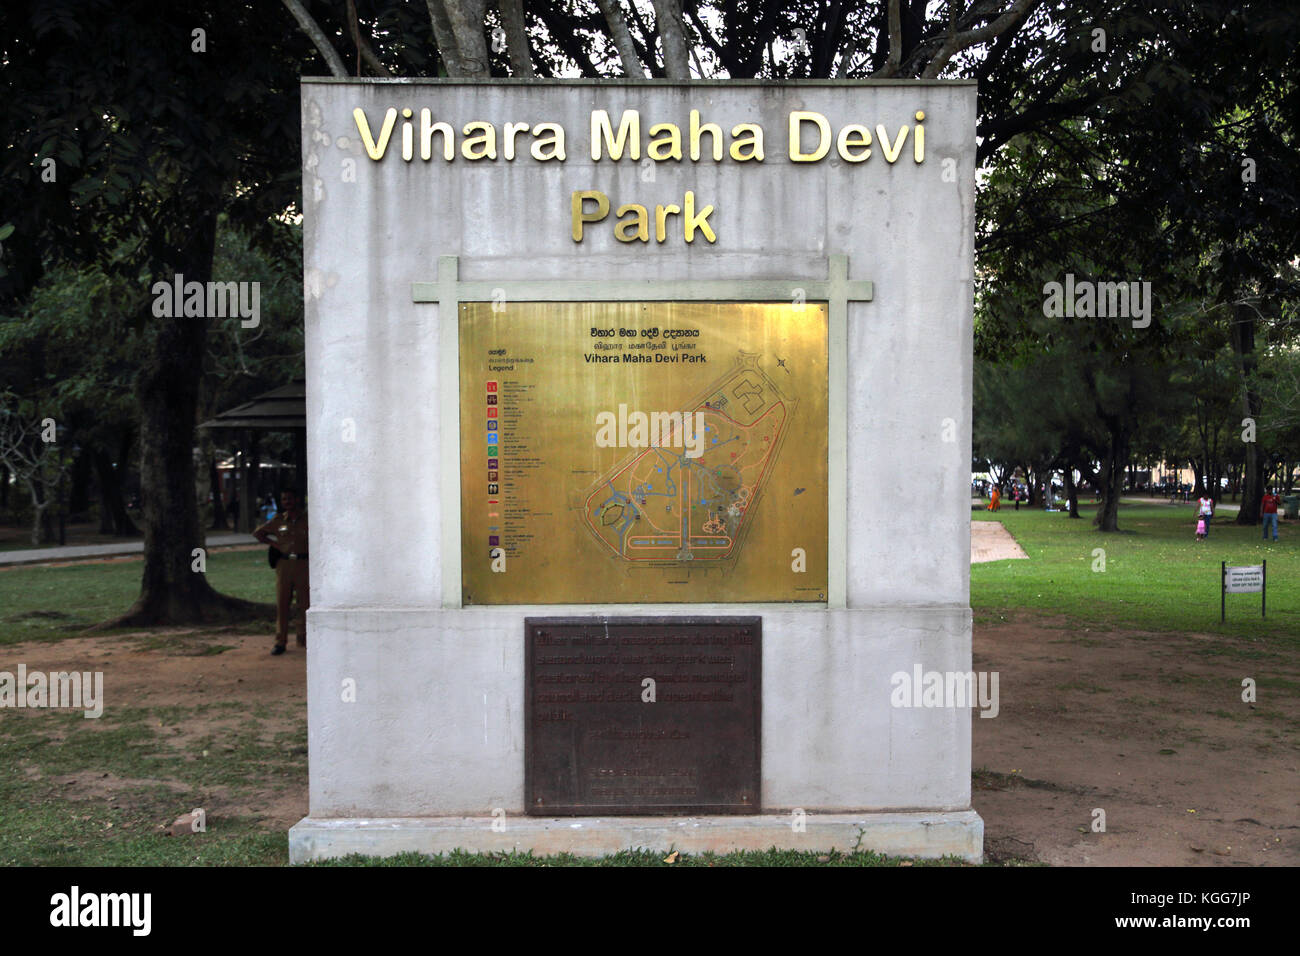 Parc Viharamahadevi Hunupitiva Colombo Sri Lanka signe multilingue carte du parc Banque D'Images